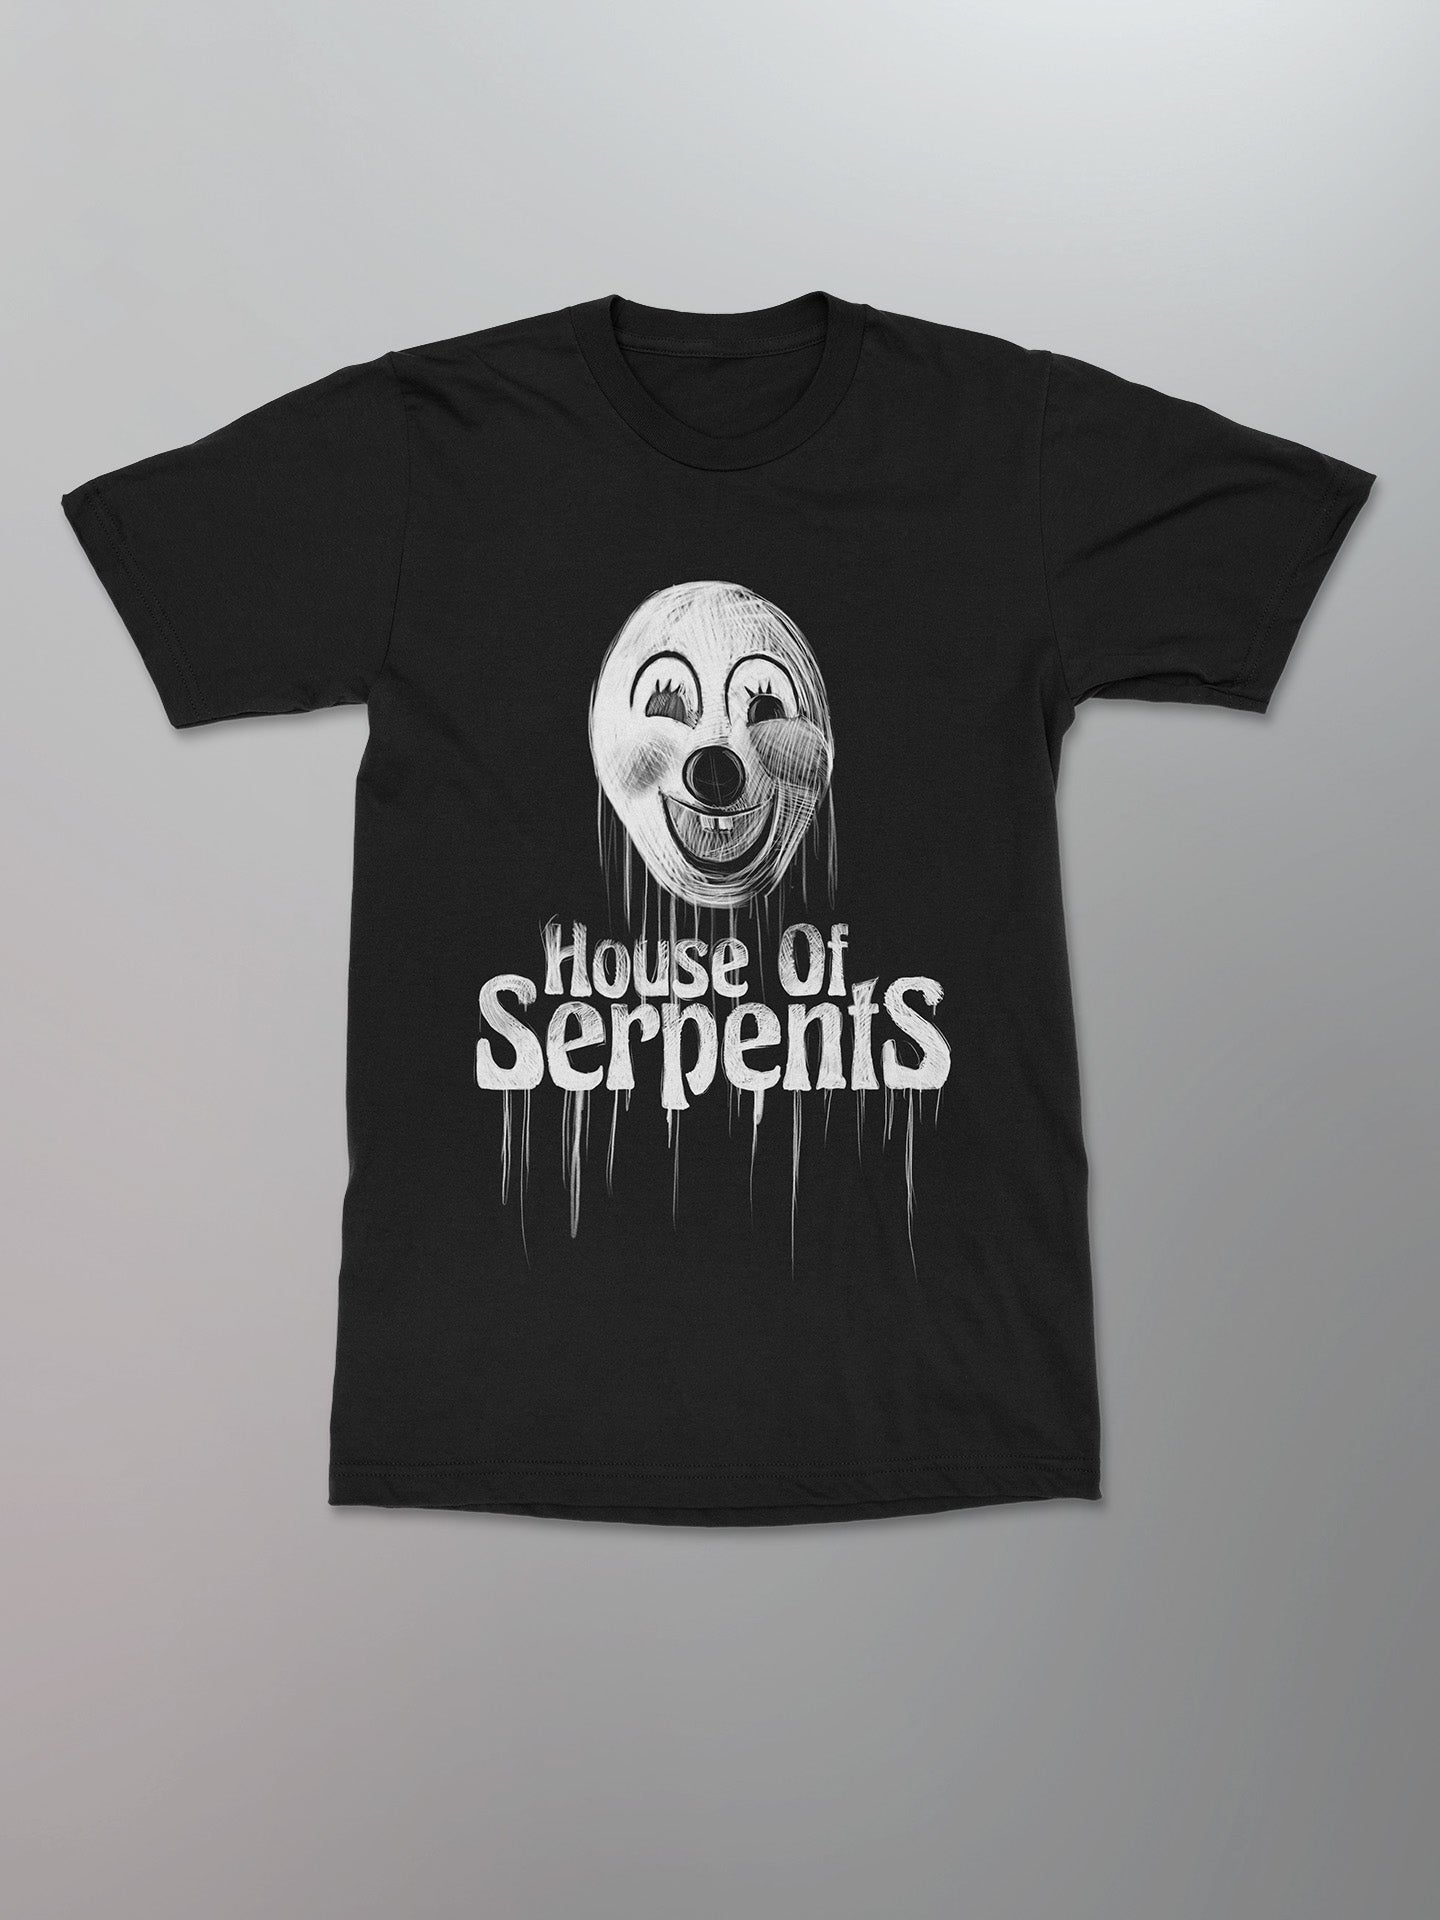 House of Serpents - TipToe The Clown Shirt